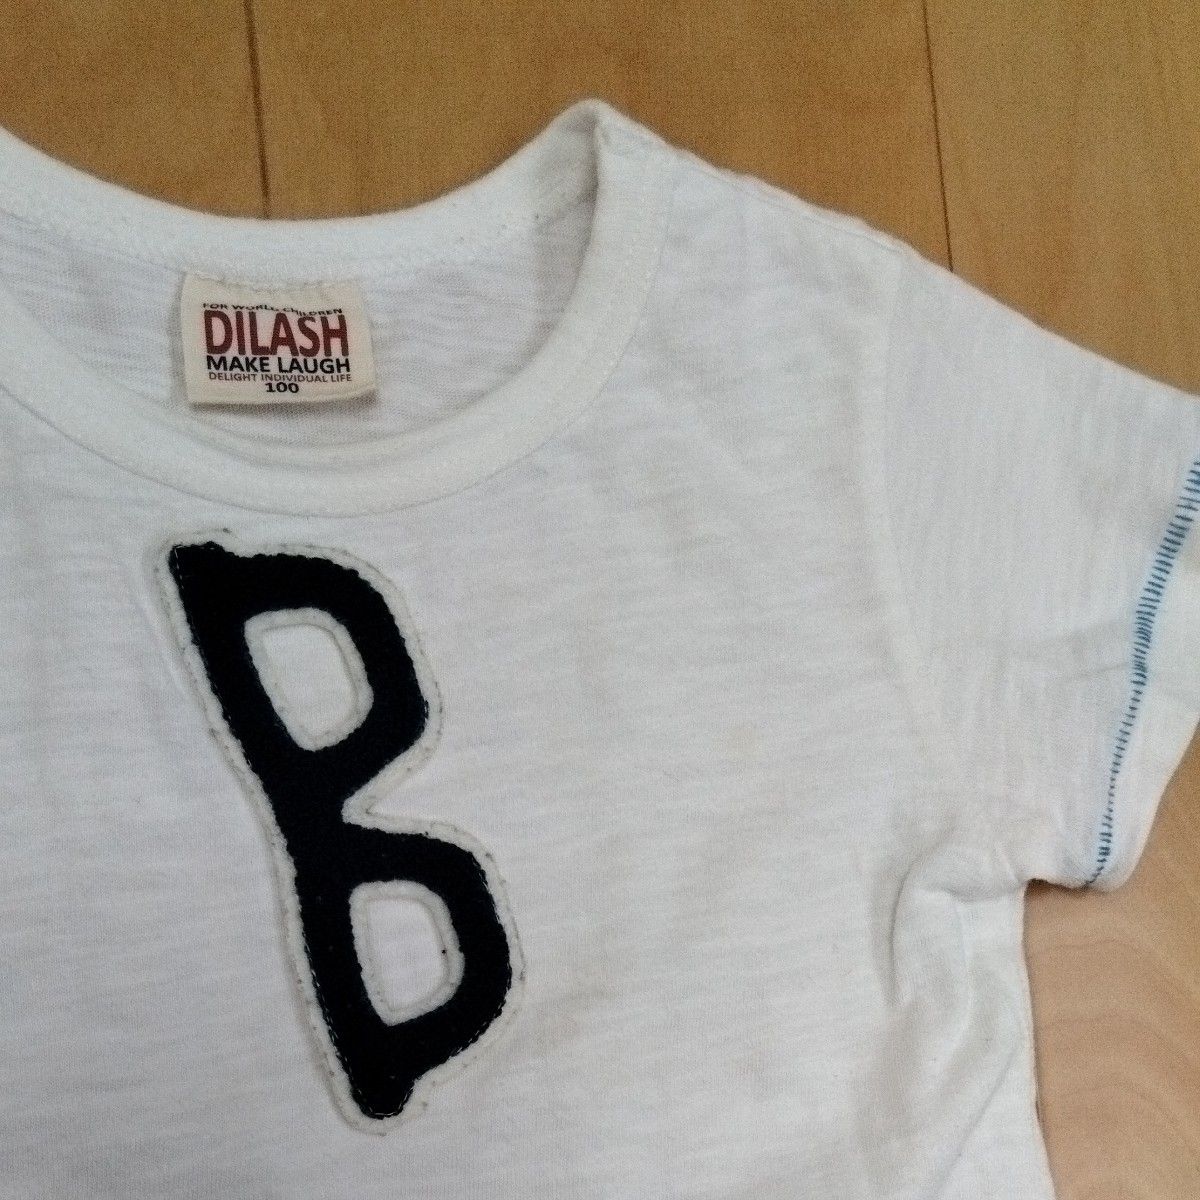 DILASH  jeans b 2nd 半袖Tシャツ 3枚セット　100cm